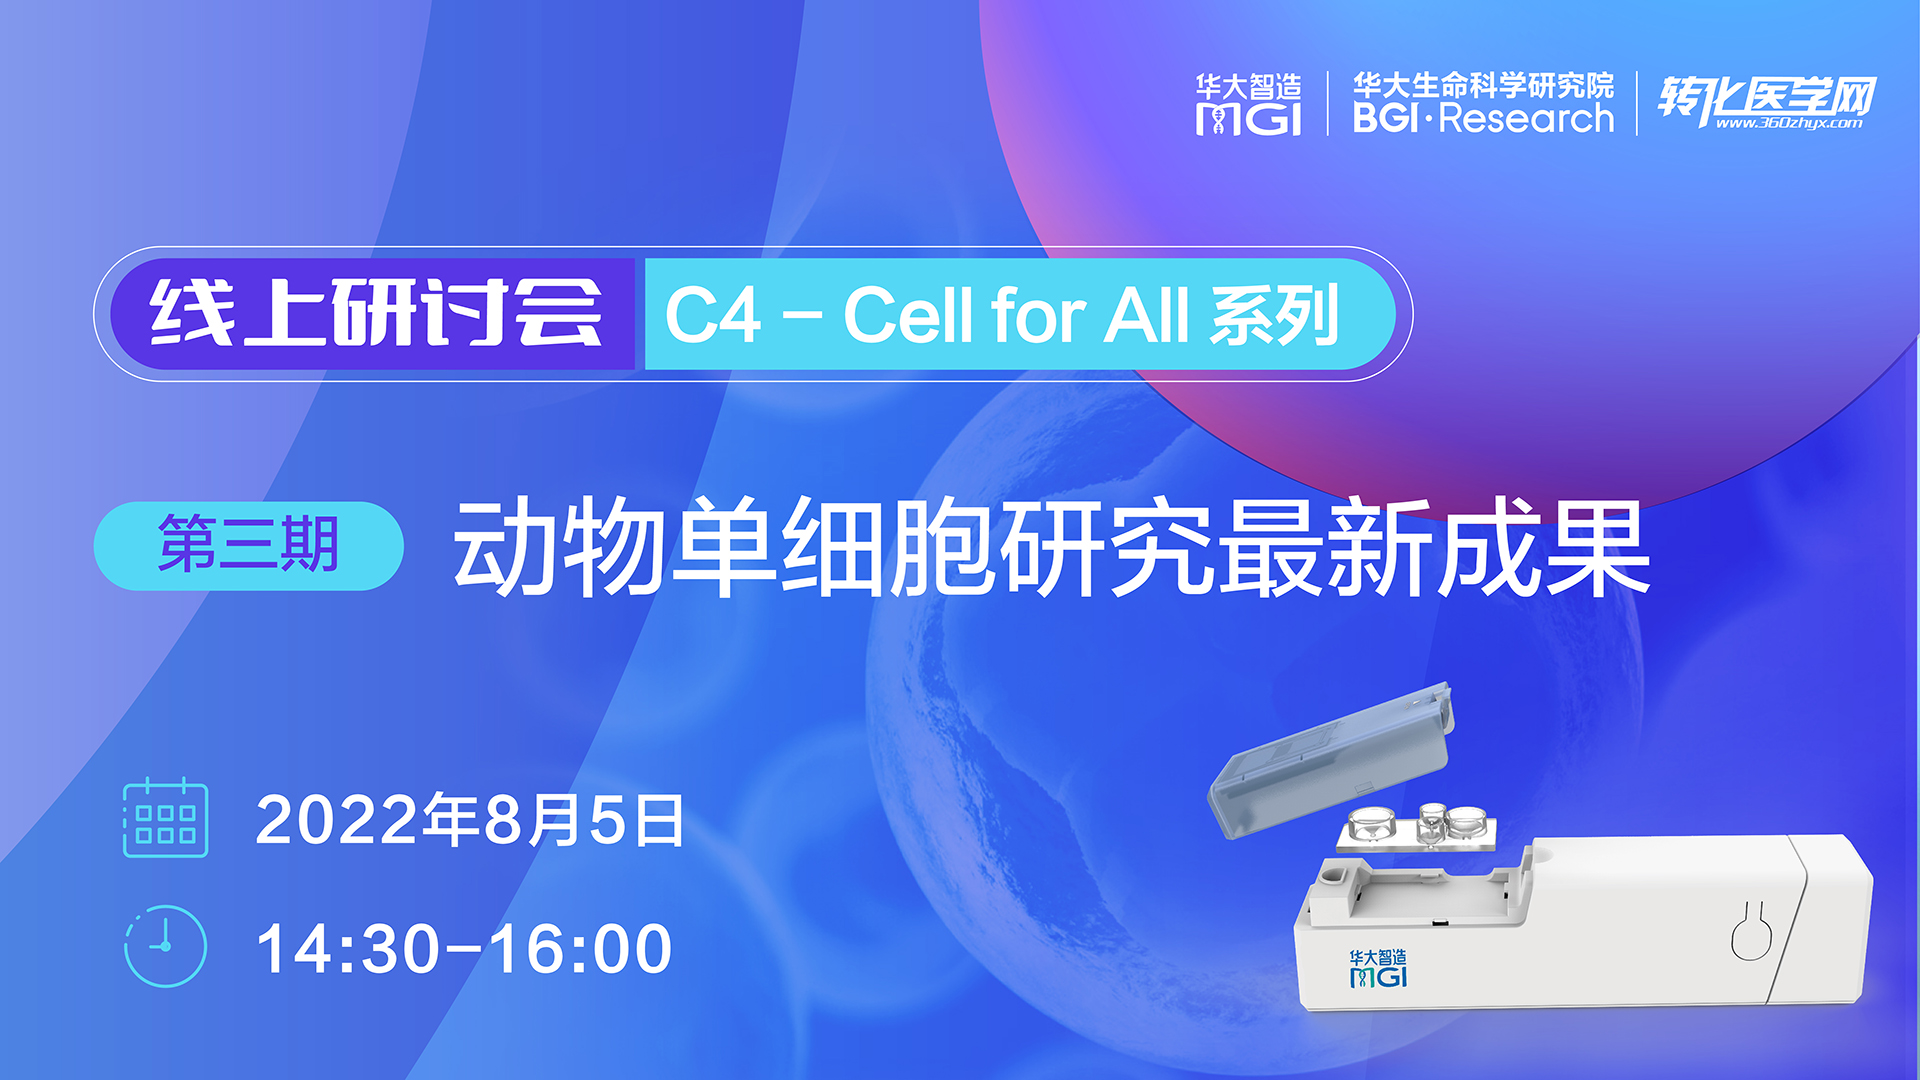  C4-Cell for all 系列第三期：动物单细胞最新研究成果